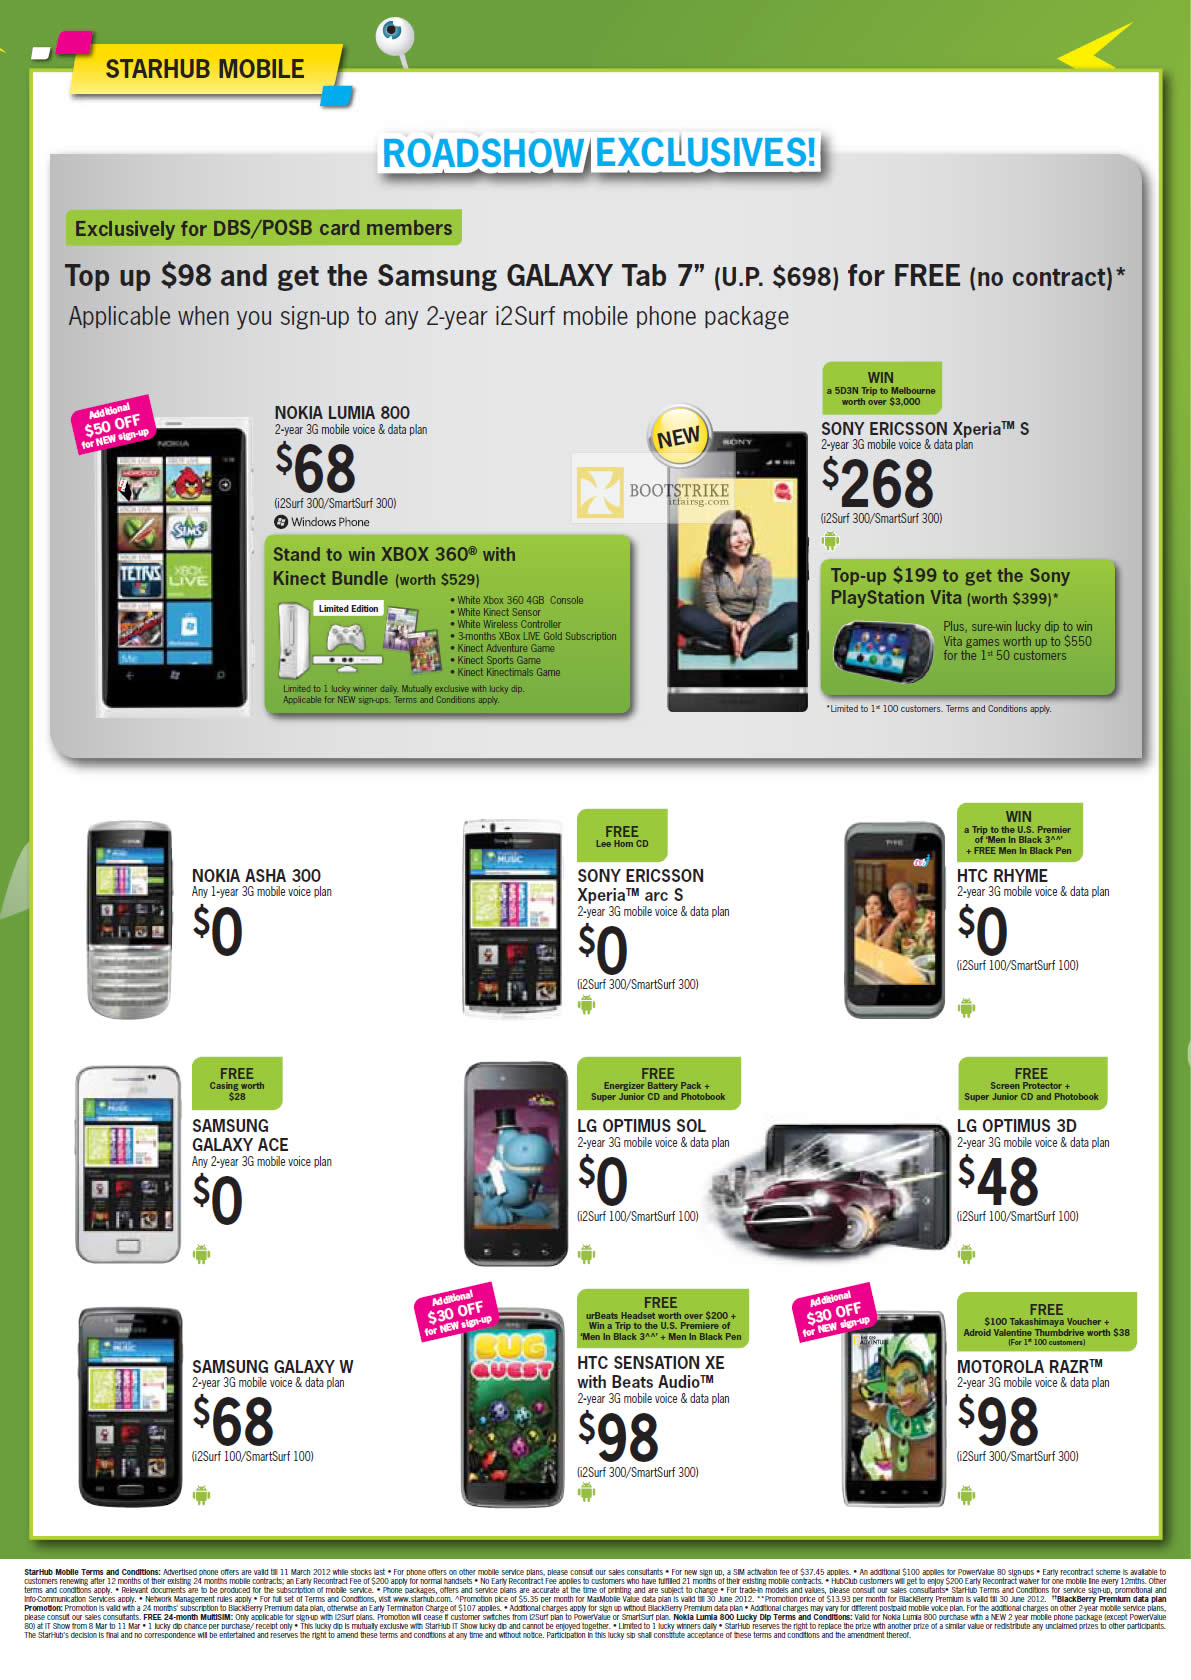 IT SHOW 2012 price list image brochure of Starhub Mobile Nokia Asha 30, Xperia Arc S, HTC Rhyme, Sensation XE, Samsung Galaxy Ace, W, LG Optimus Sol, 3D, Motorola Razr